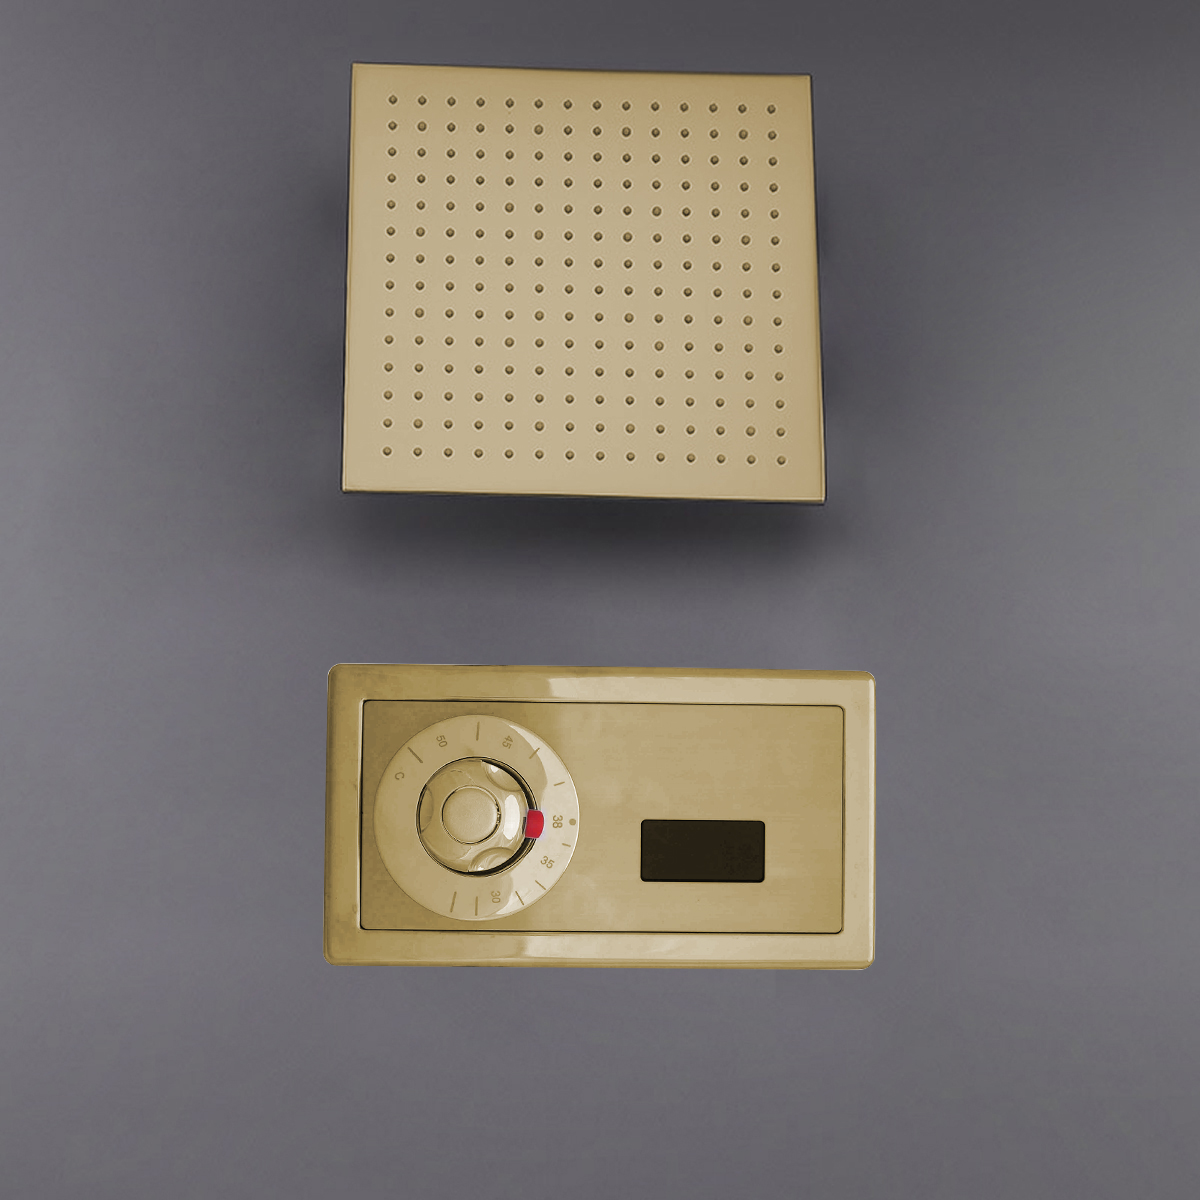 Brushed Gold Sensor Controlled Automatic Shower Set